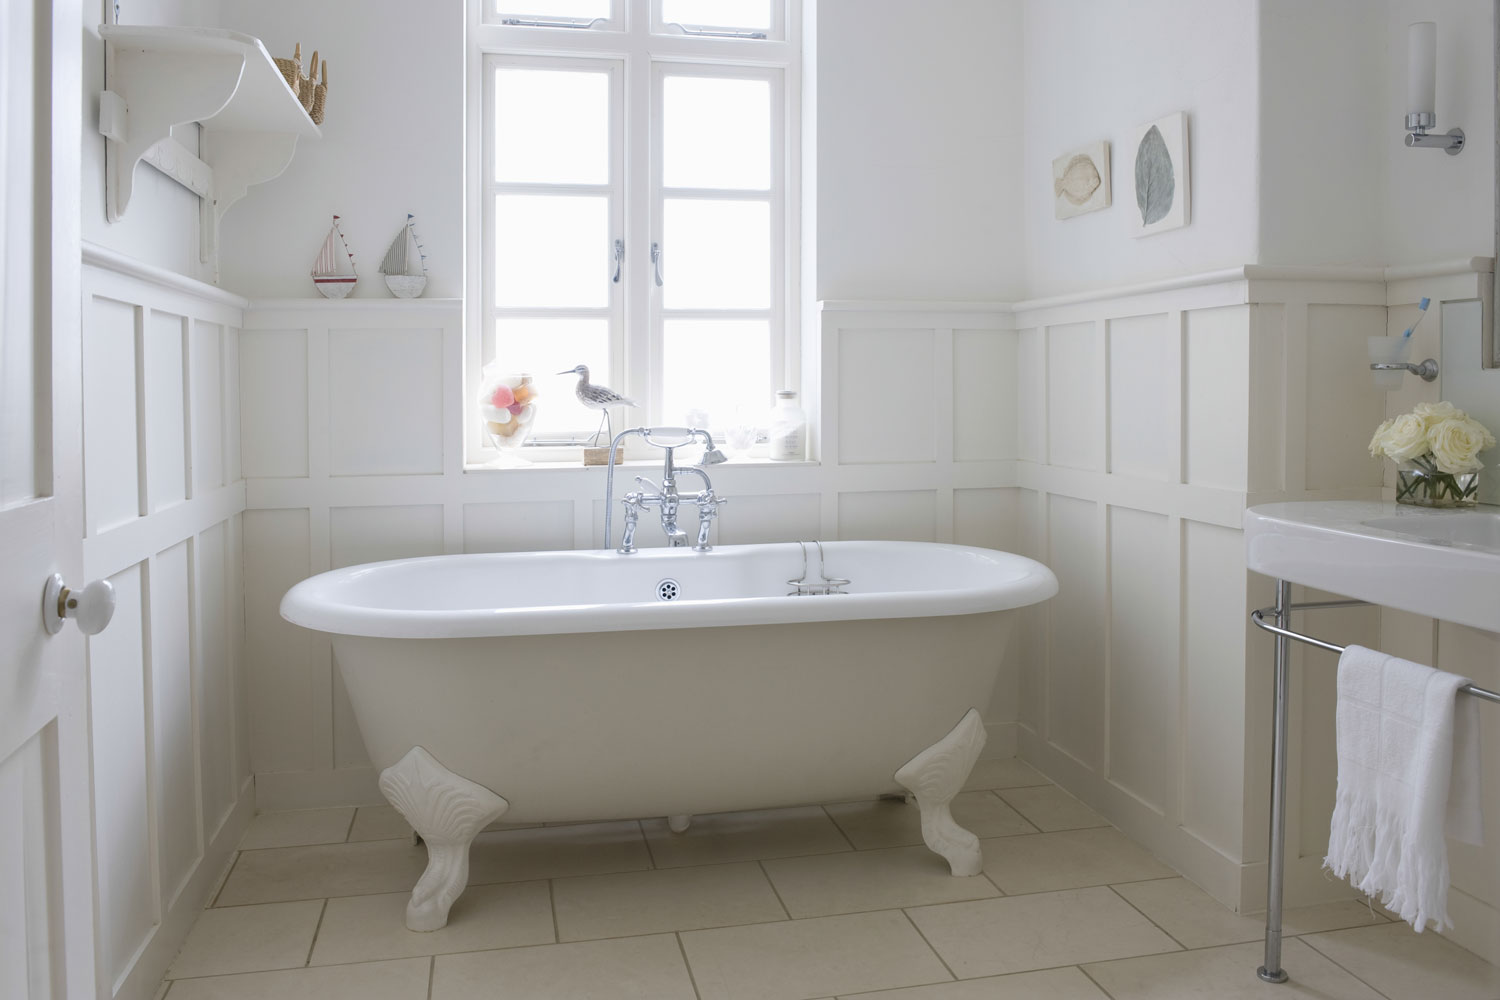 A freestanding white bathtub inside a classic inspired bathroom